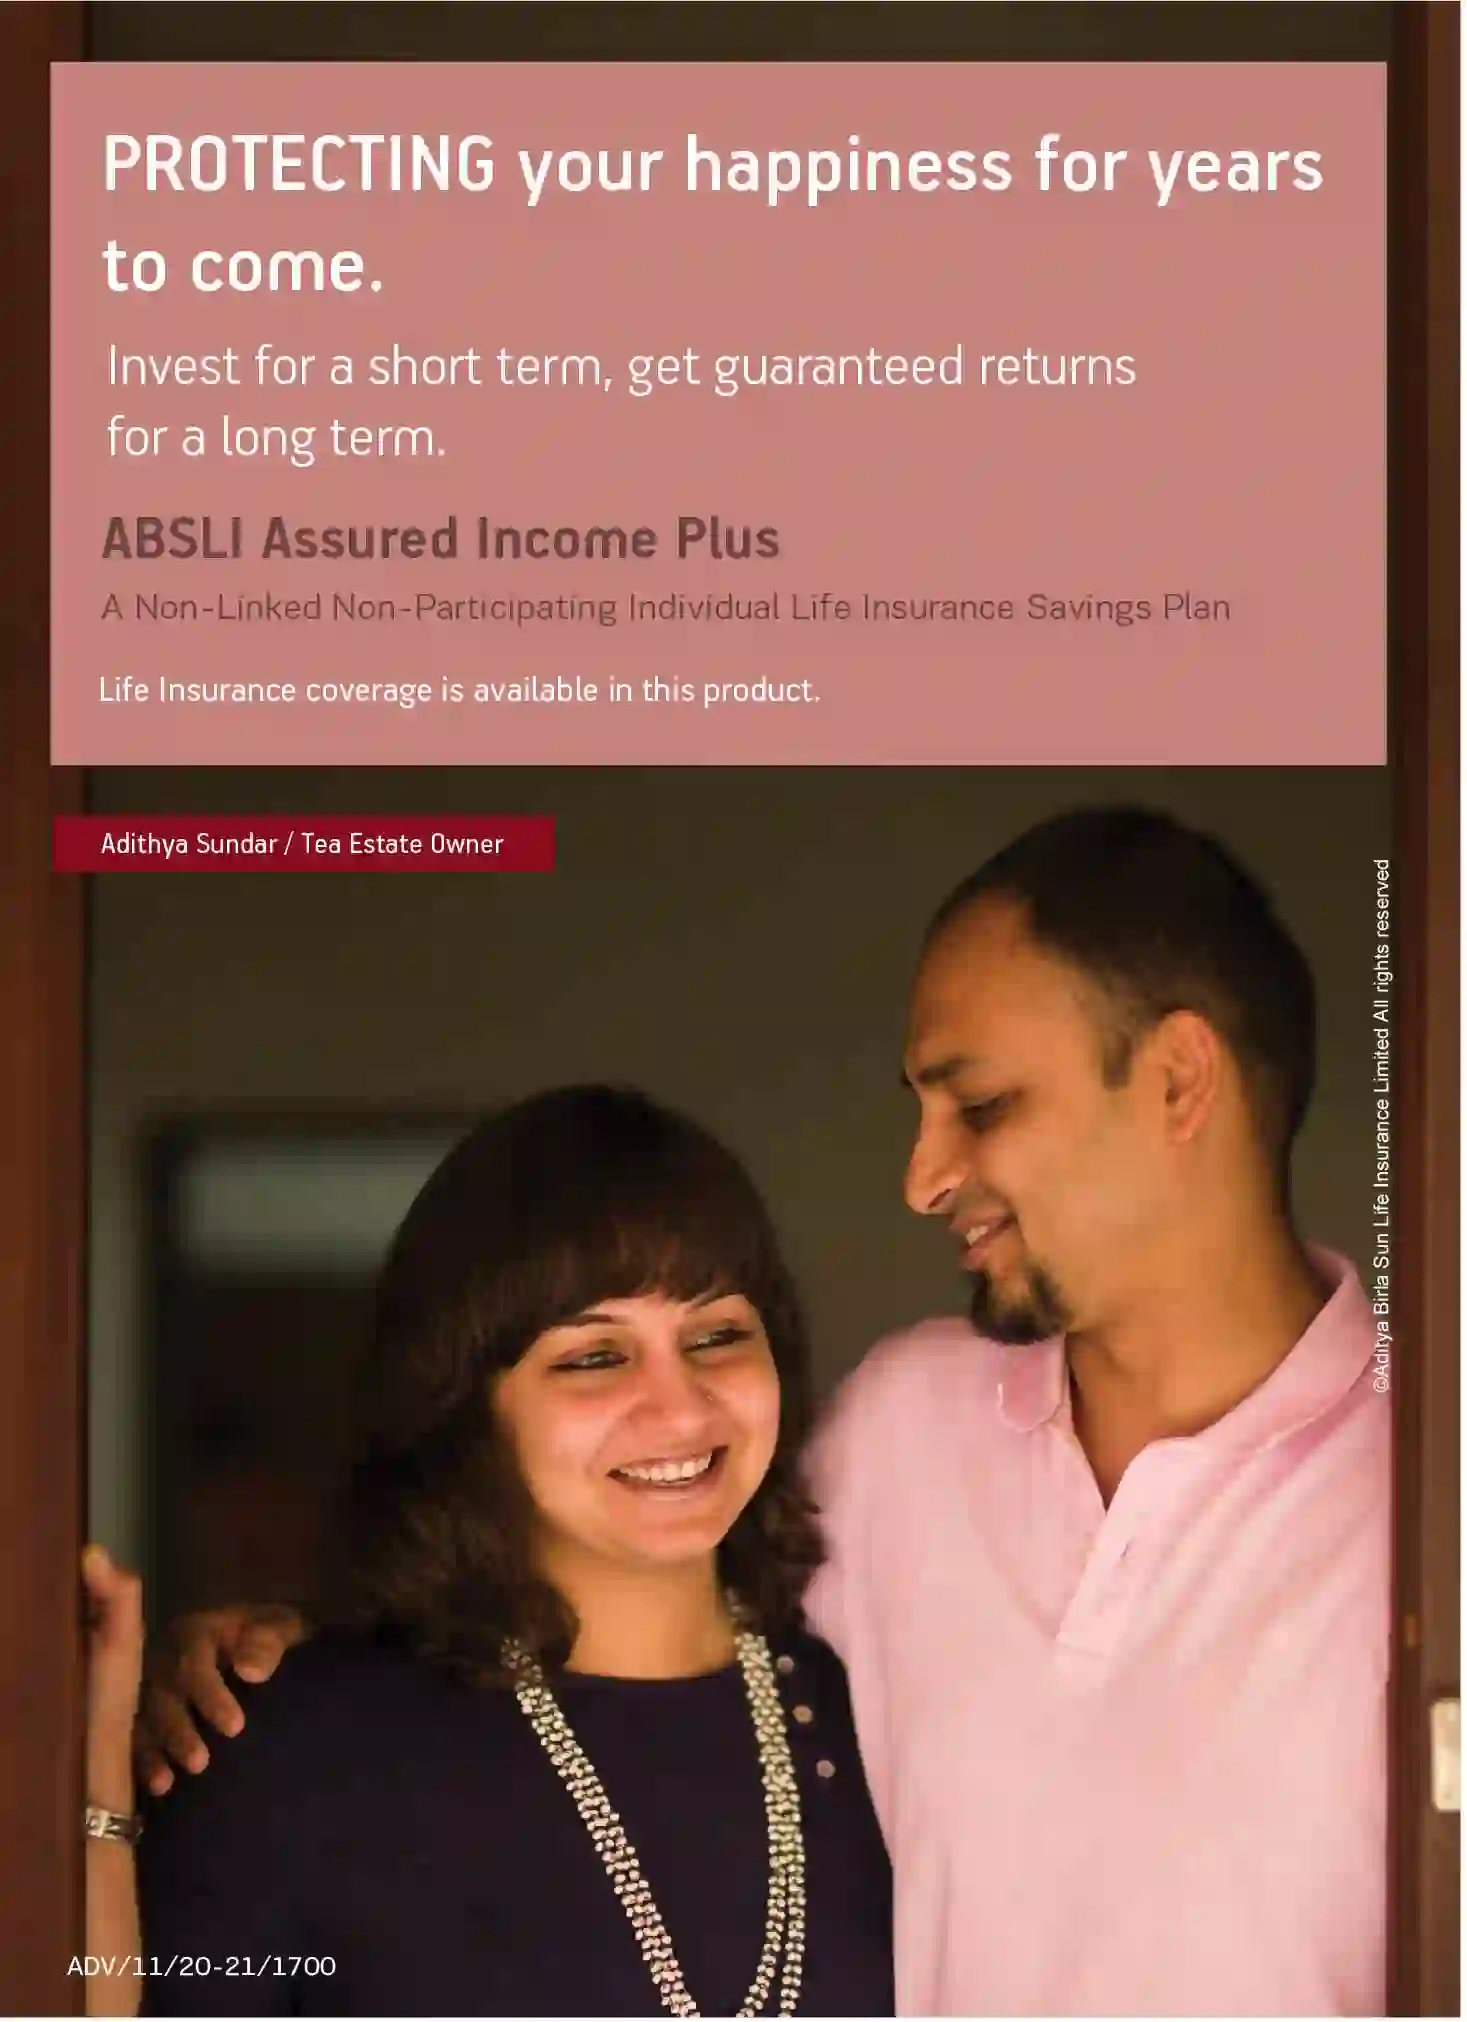 ABSLI Assured Income Plus Plan (Savings Plan)